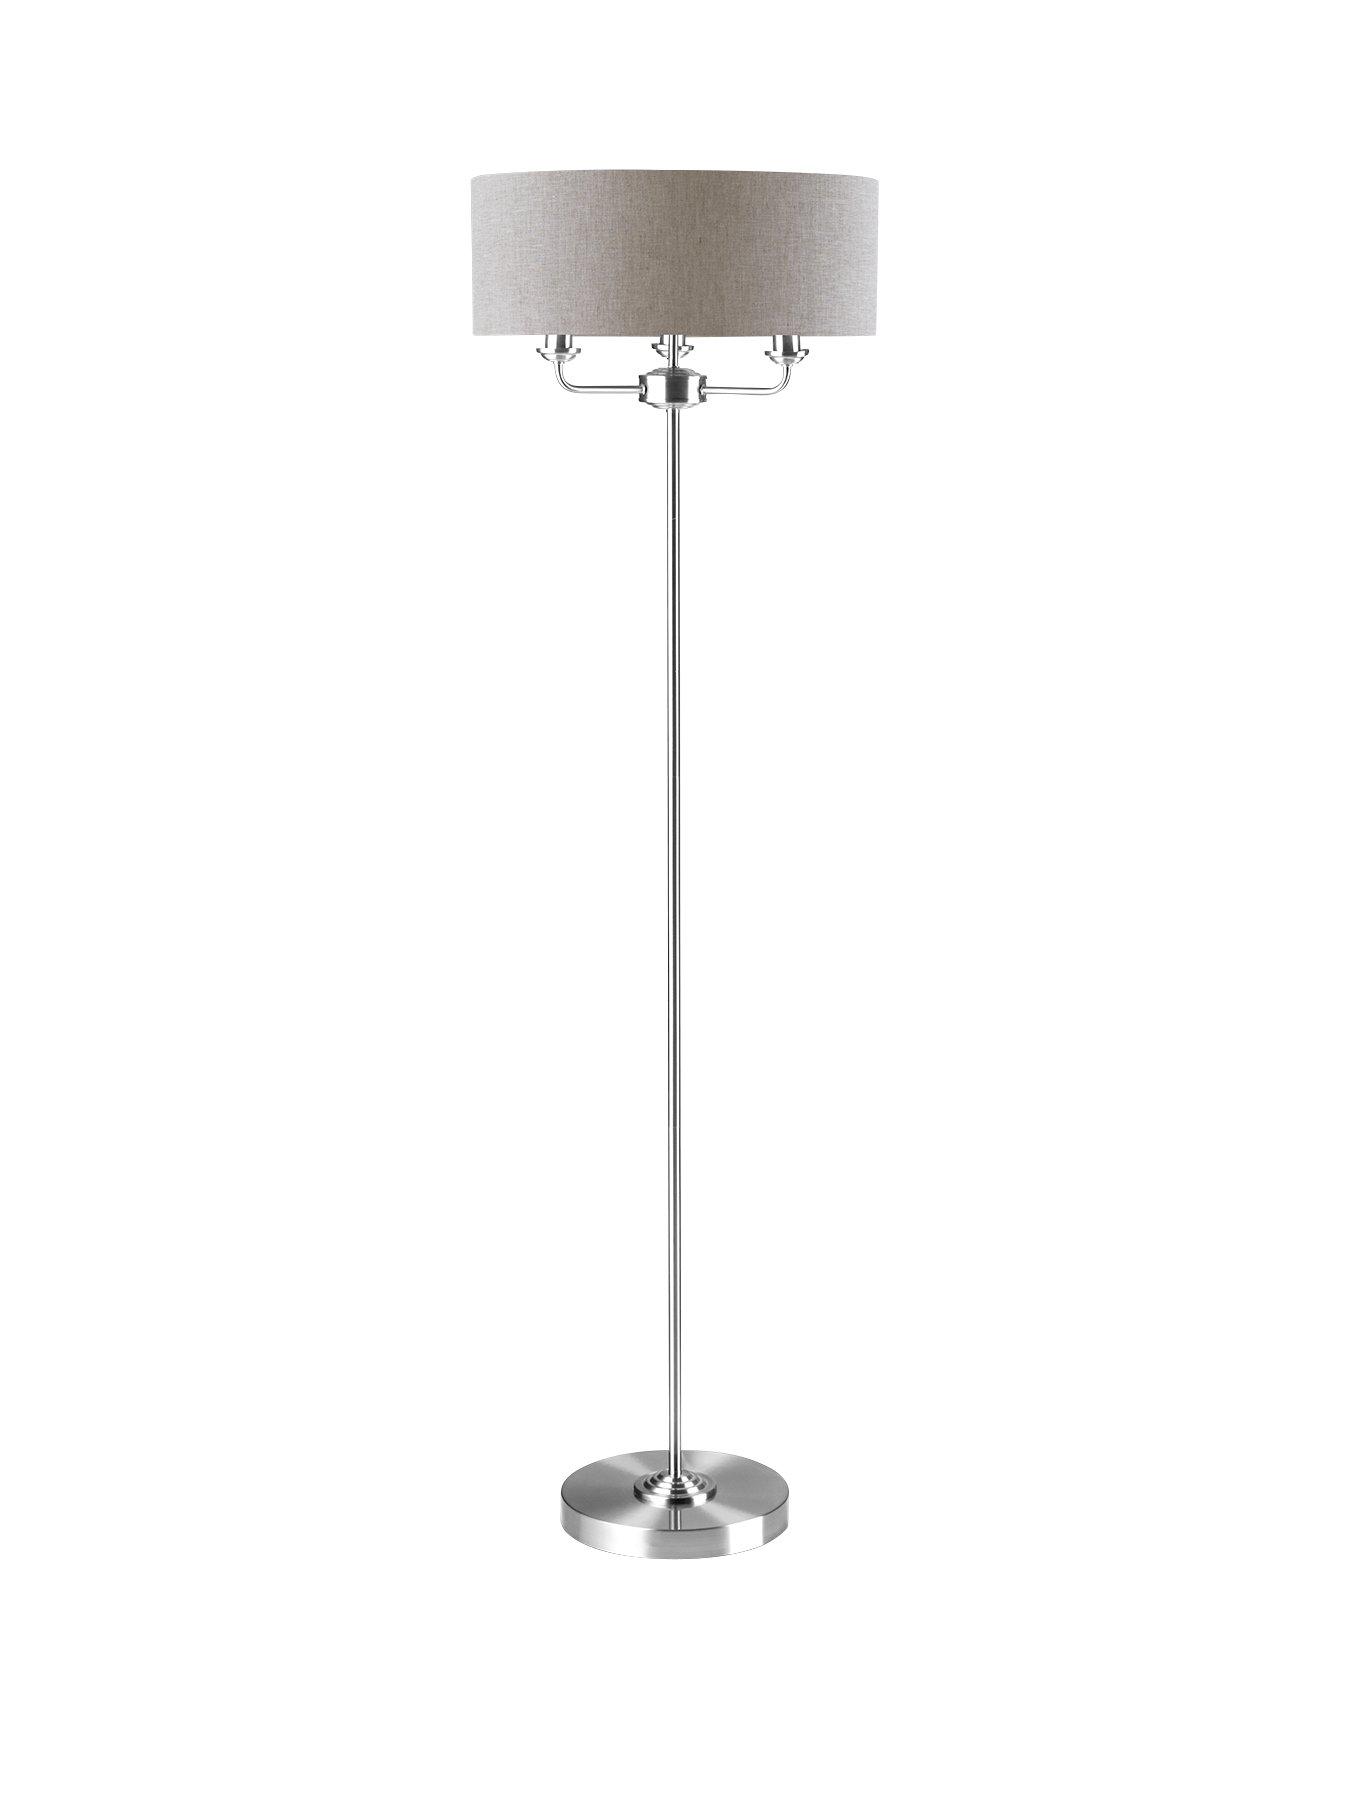 3 light standing lamp